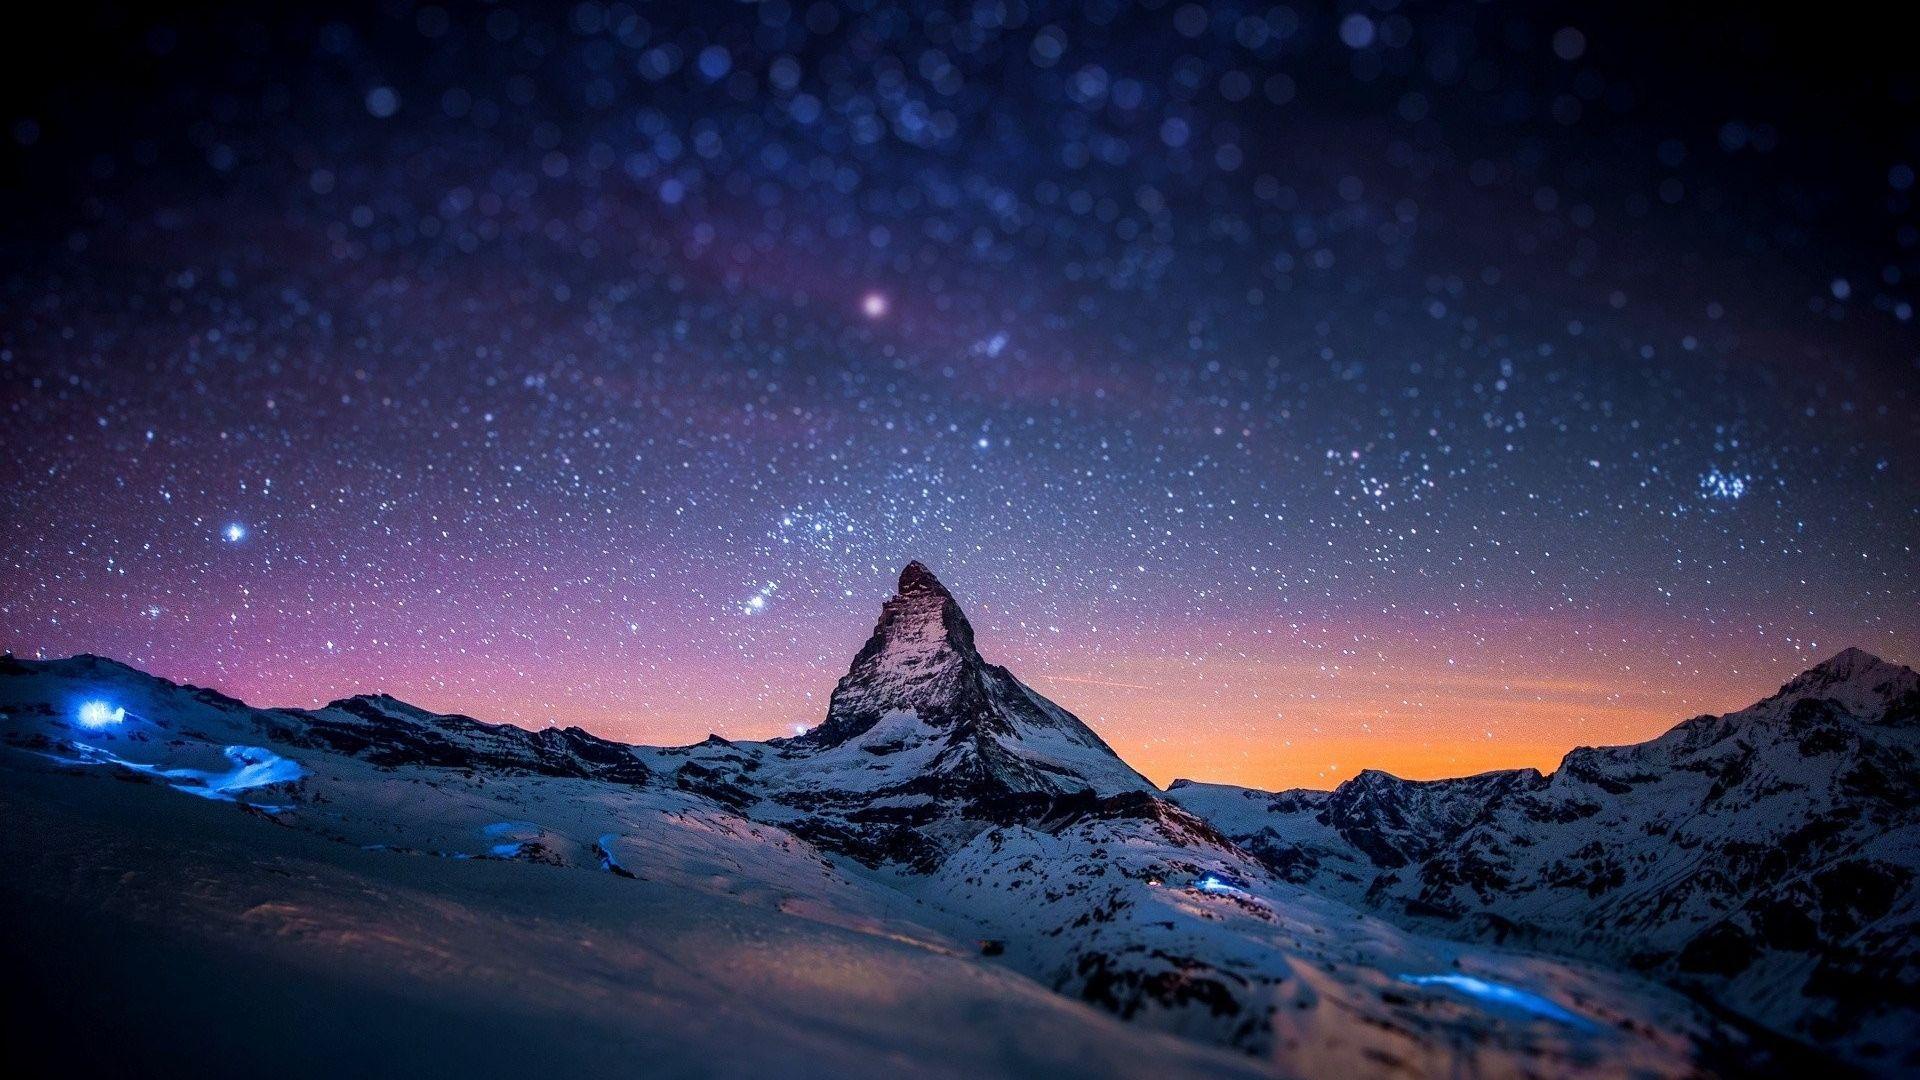 Mountain Night Sky Wallpapers - Top